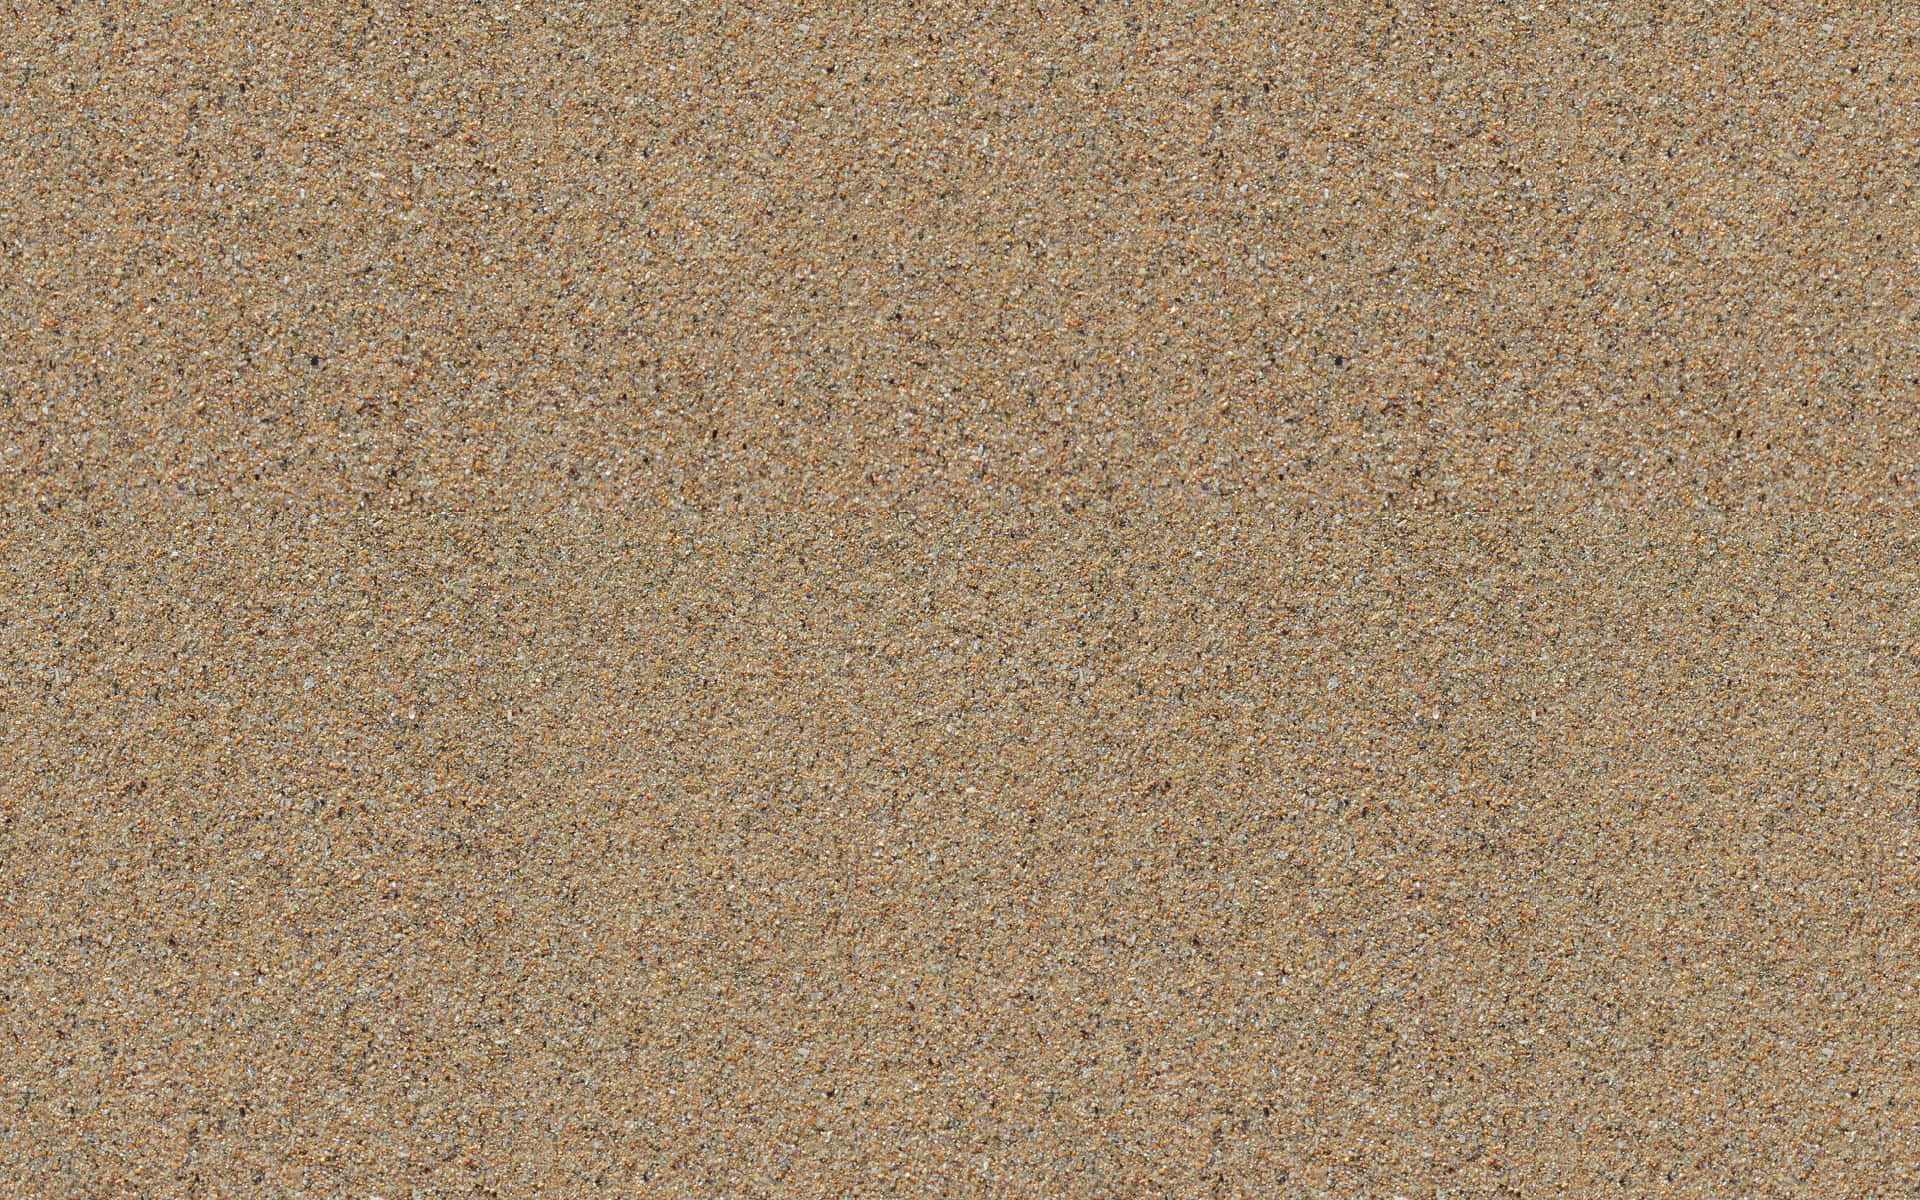 A Sand Beach With A Lot Of Sand